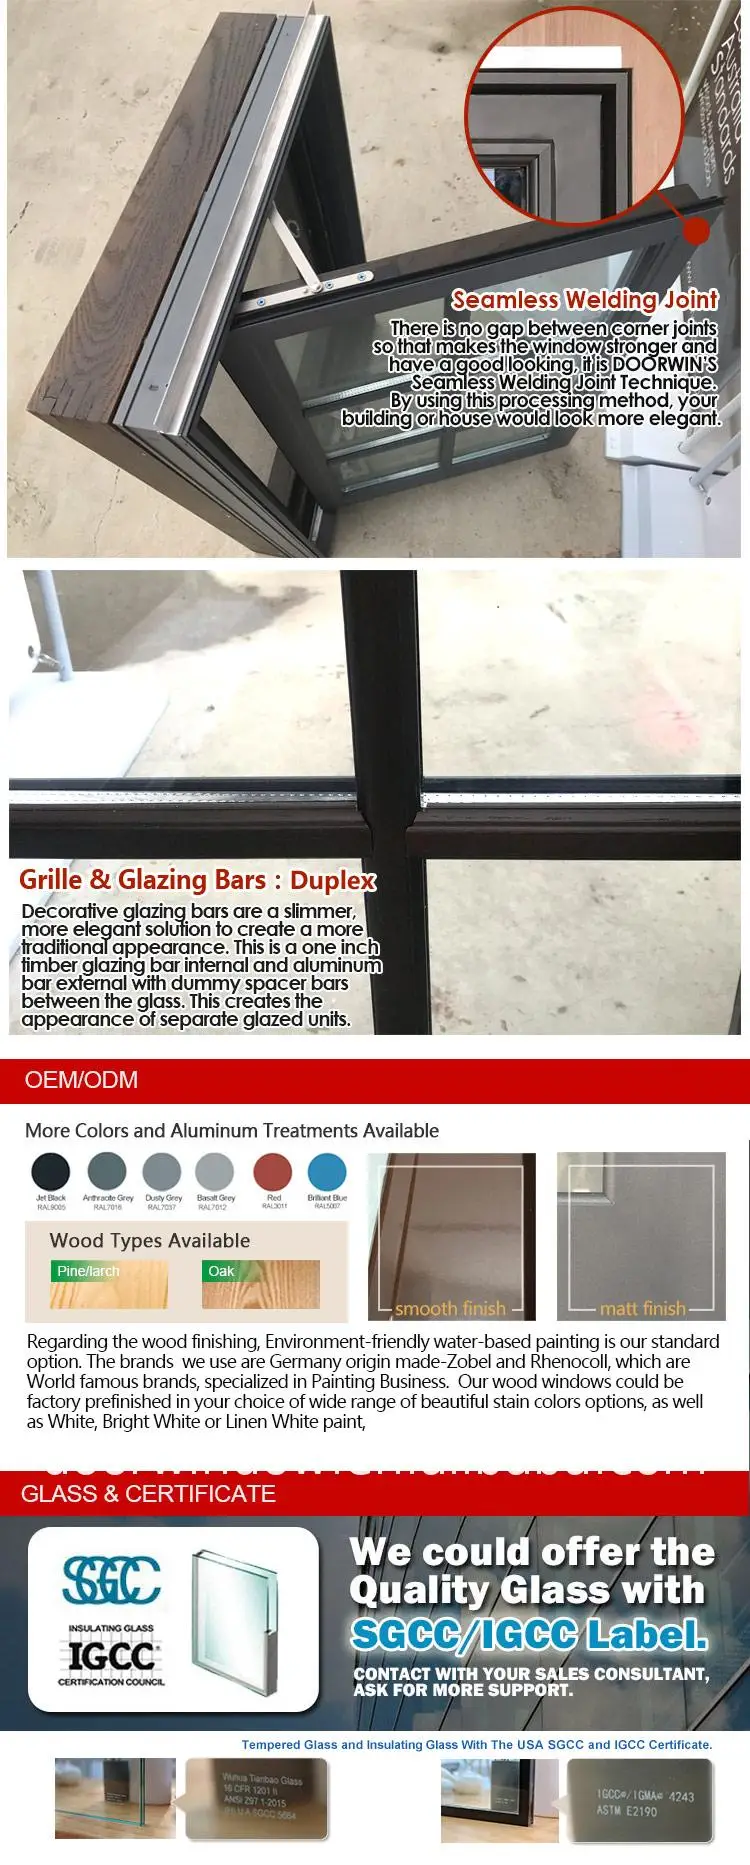 Hot sale factory direct window opening handle handles uk fixed panel